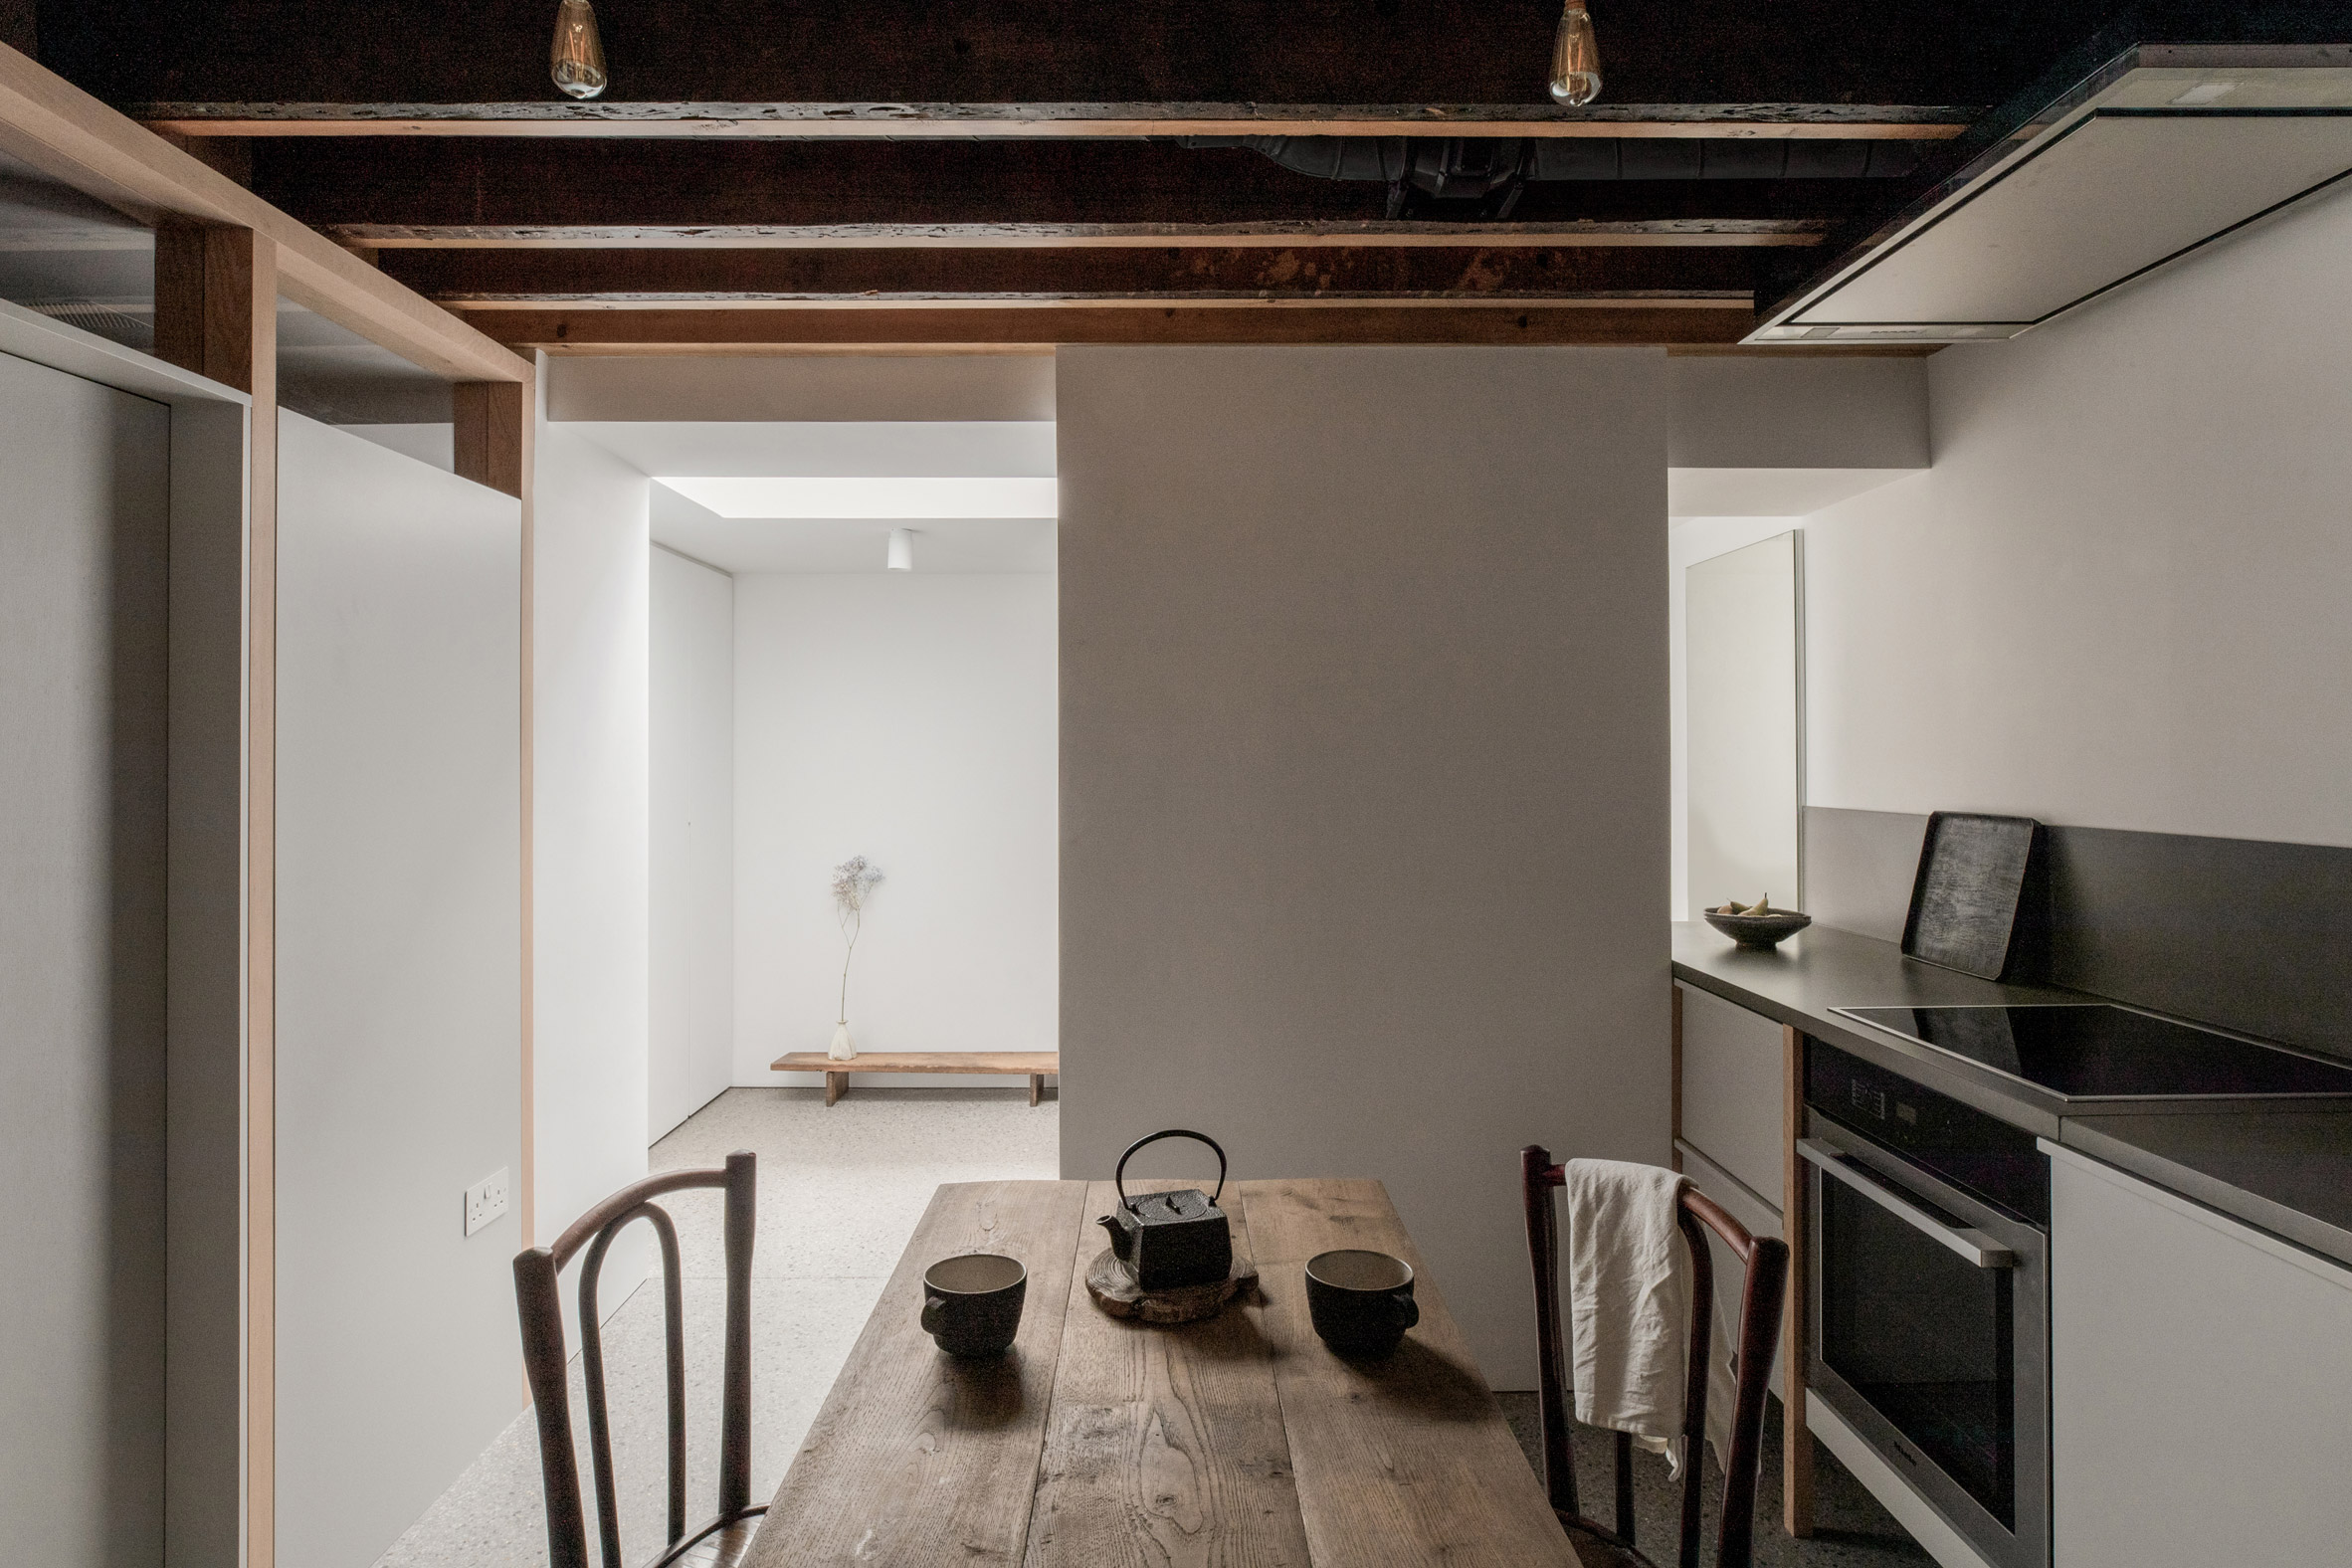 Kitchen interior within London home renovation by Tuckey Design Studio